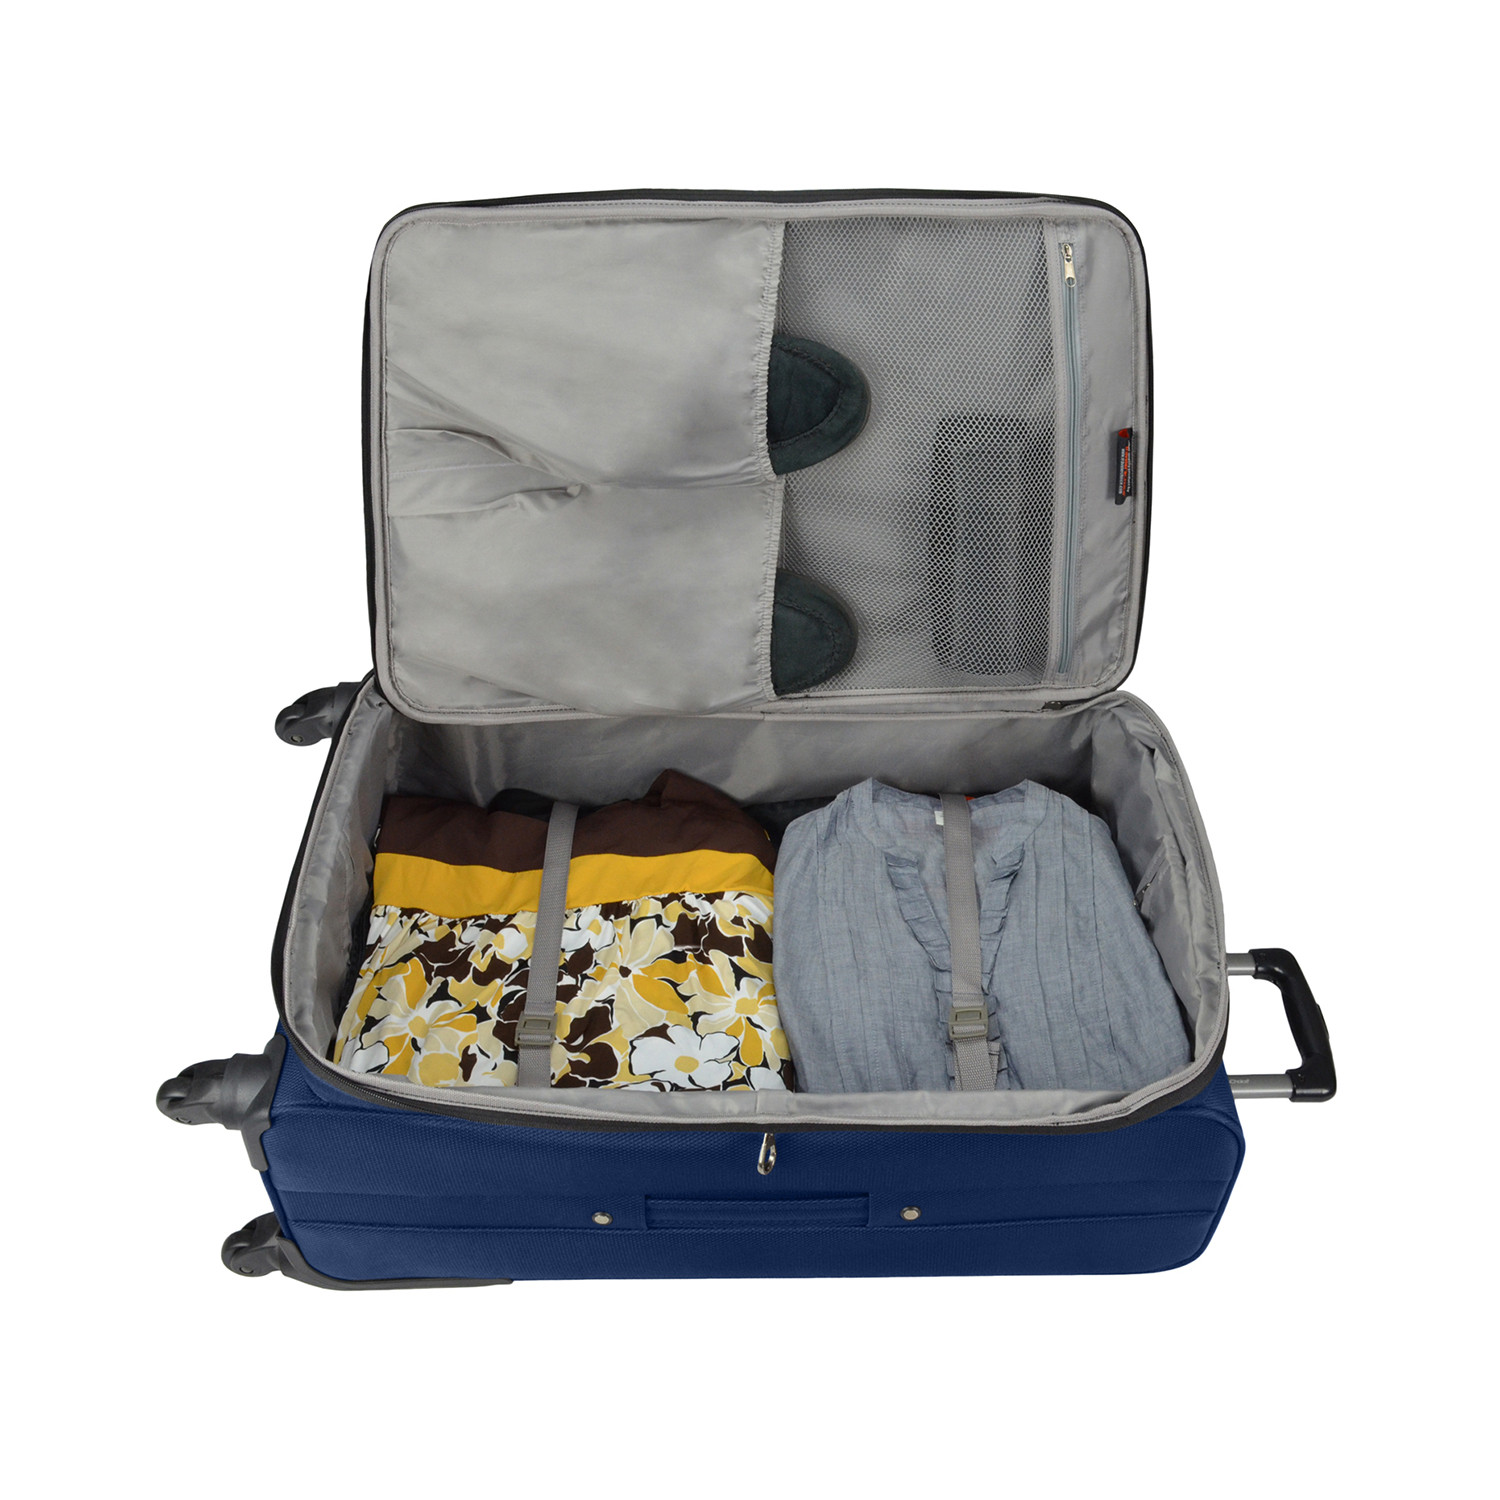 Merced Lightweight Spinner Luggage // Navy (31